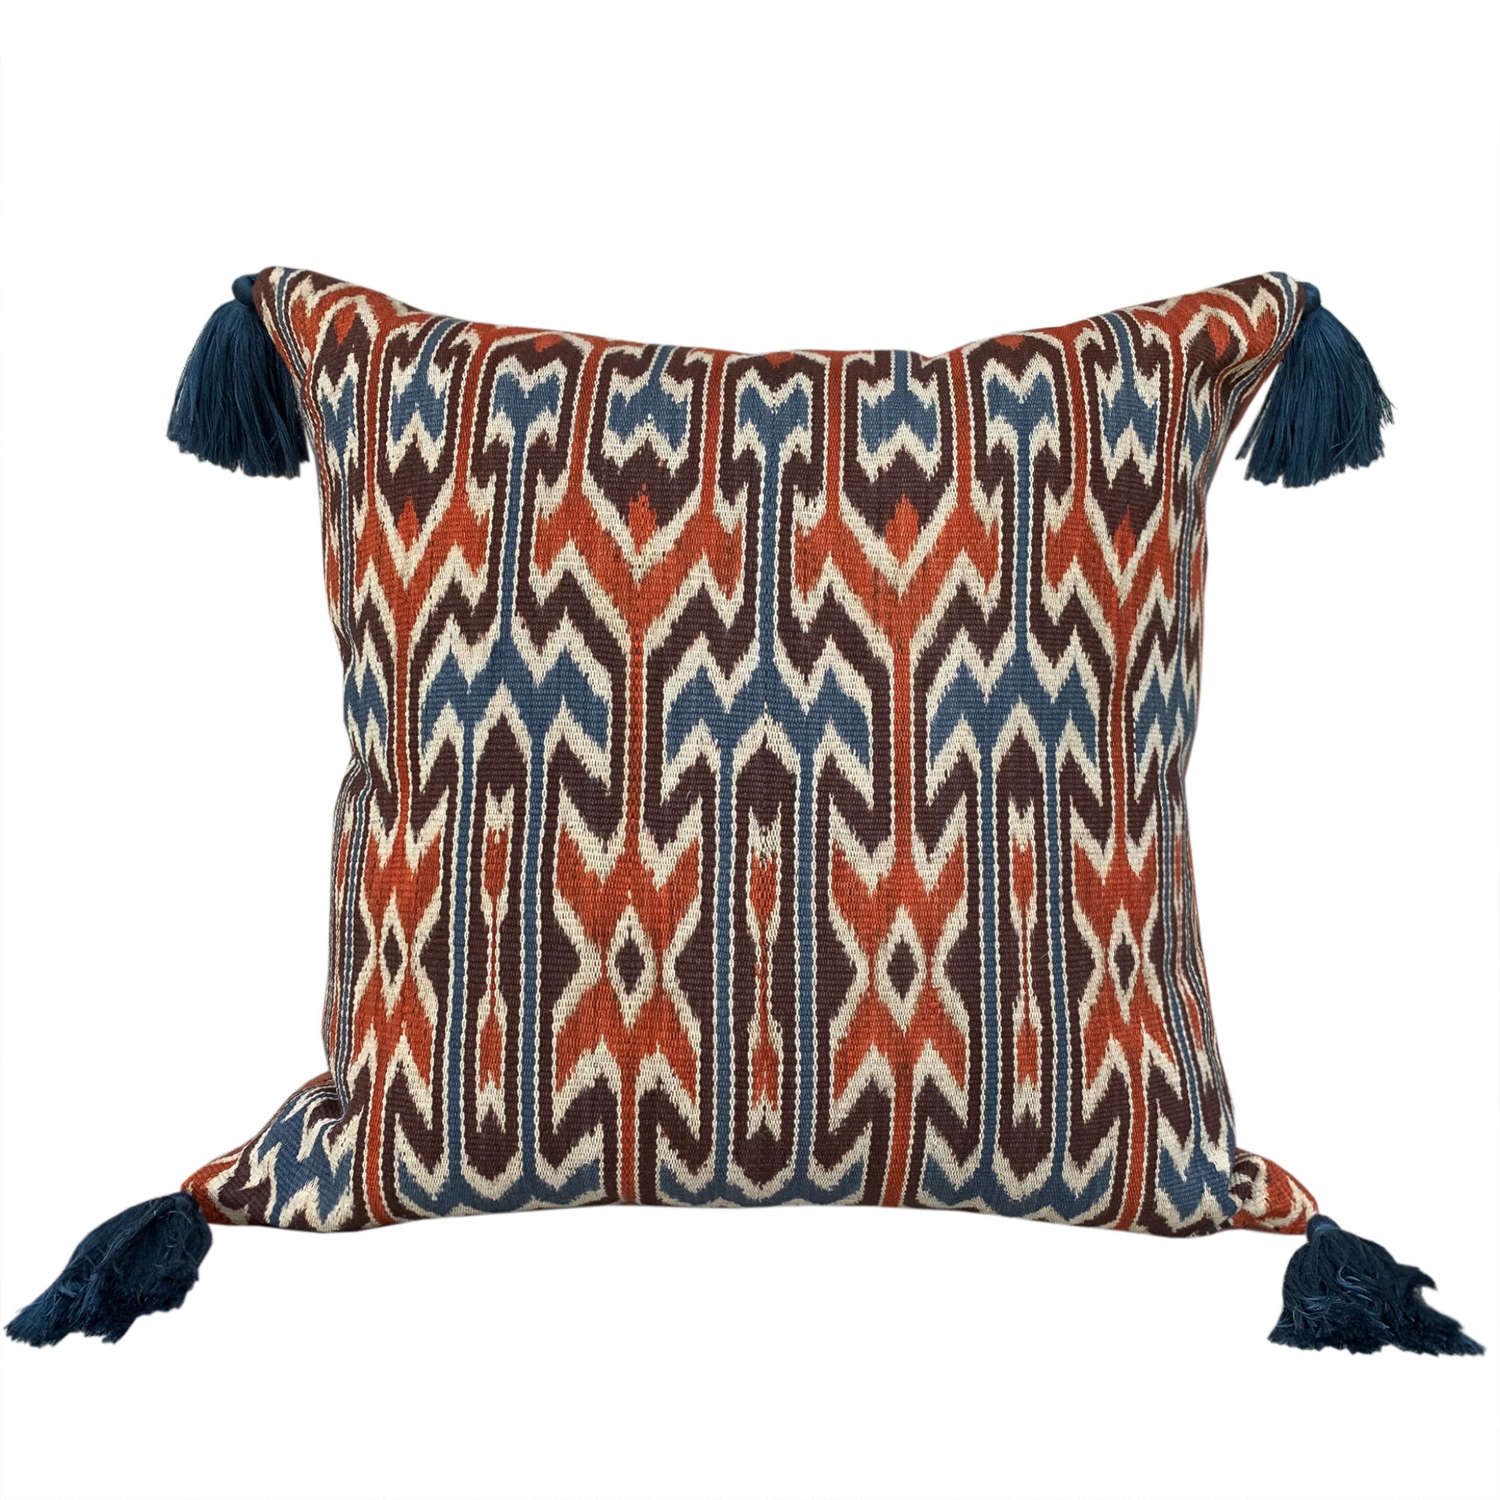 Sekomandi cushions with tassels